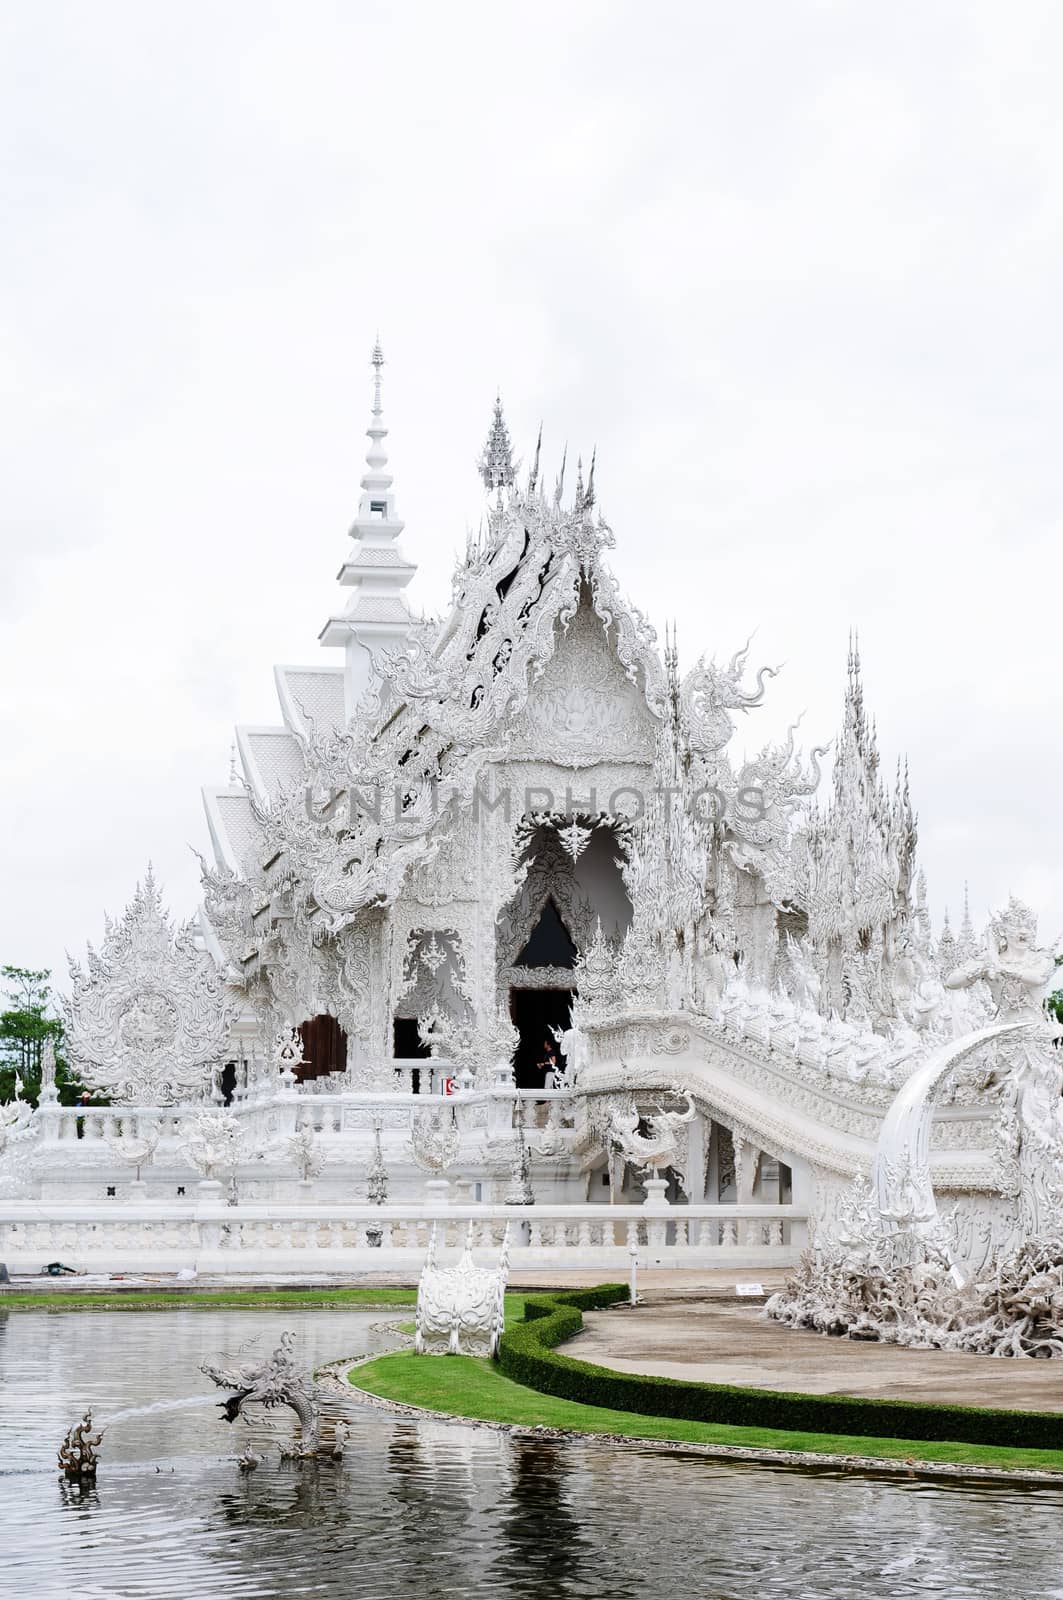 Famous landmark of White Temple in Chiang Rai, Thailand